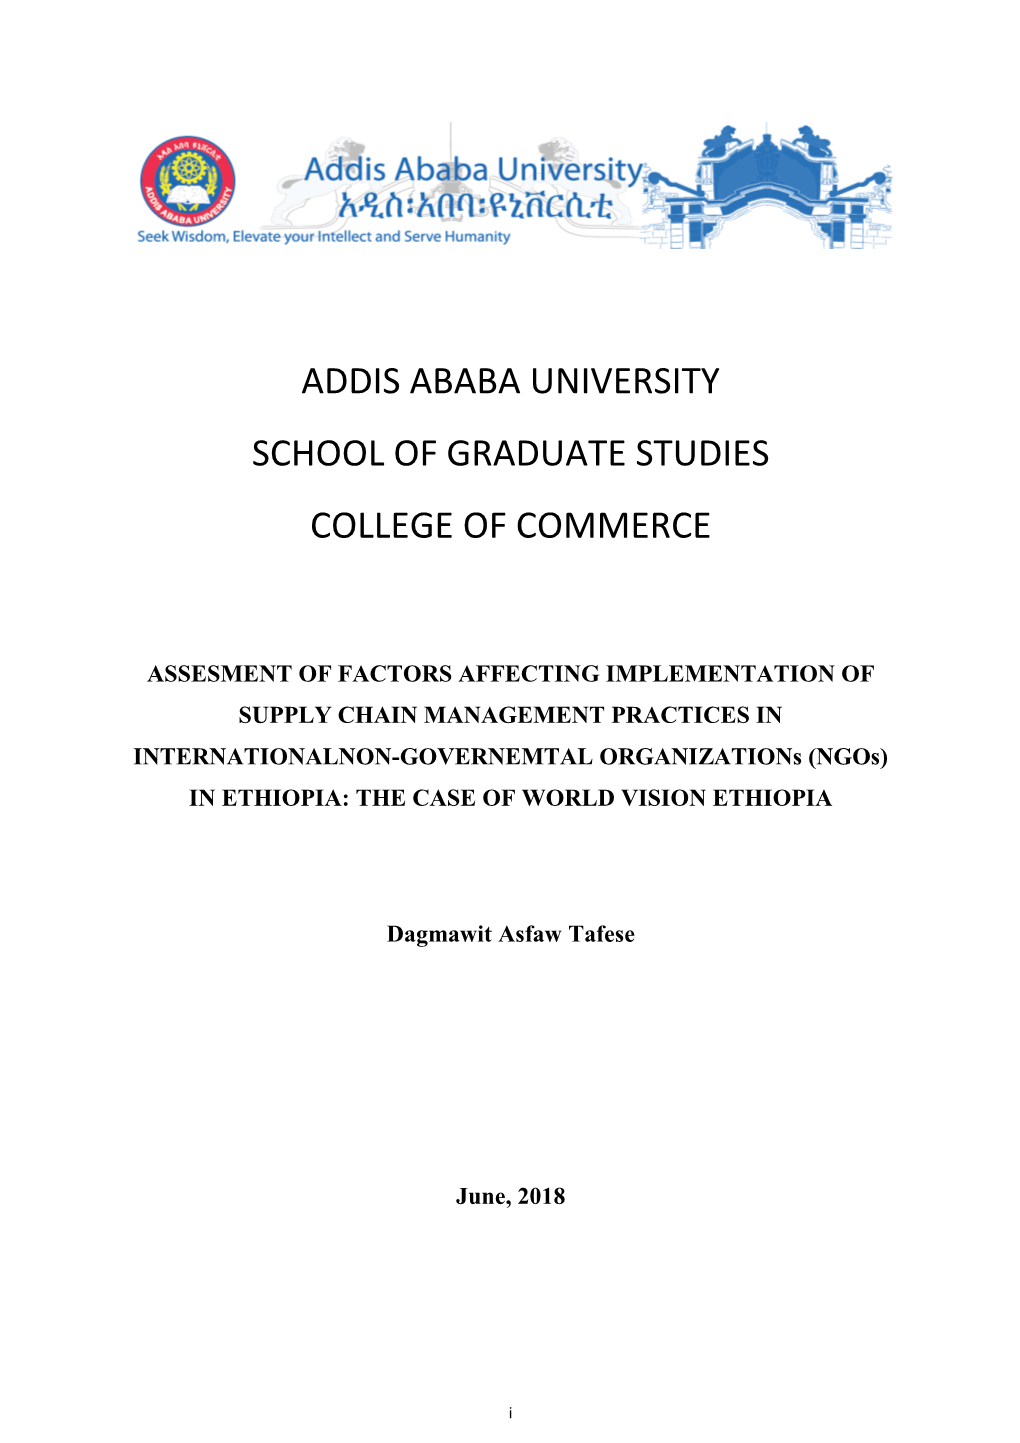 Addis Ababa University School of Graduate Studies College of Commerce